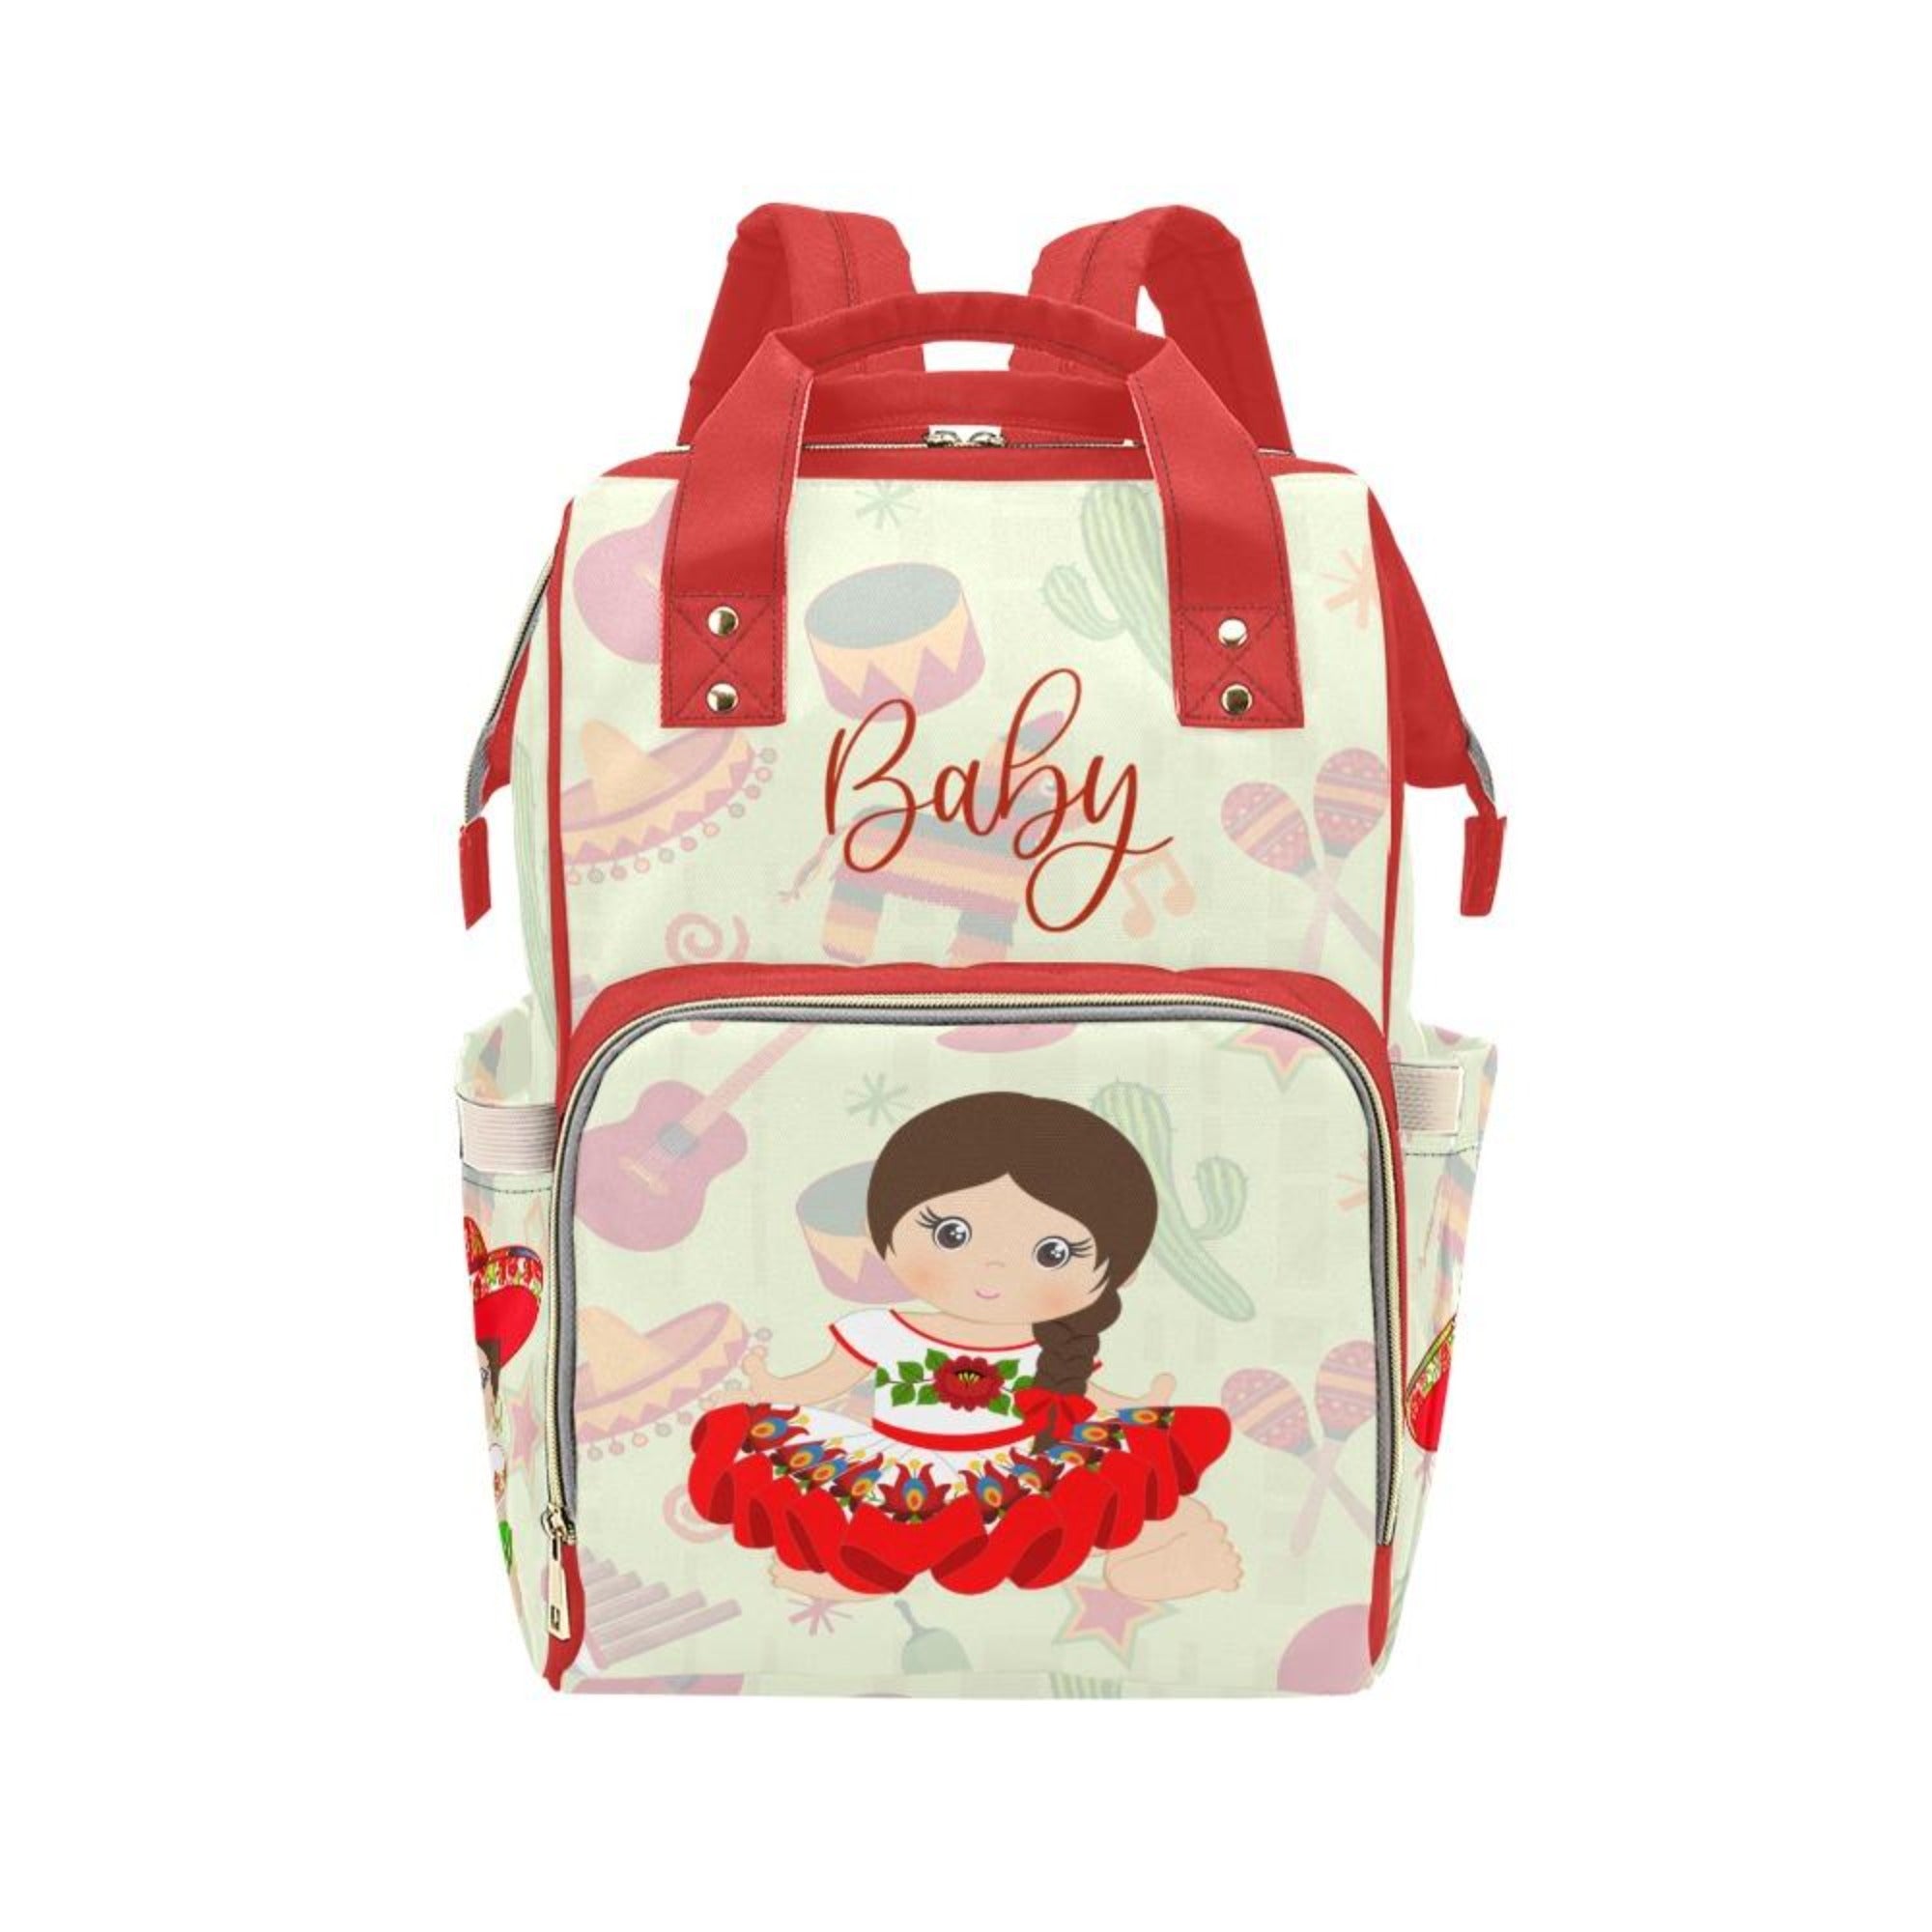 Designer Diaper Bags - Latina American Baby Girl - Red Accents - Waterproof Multi-Function Backpack